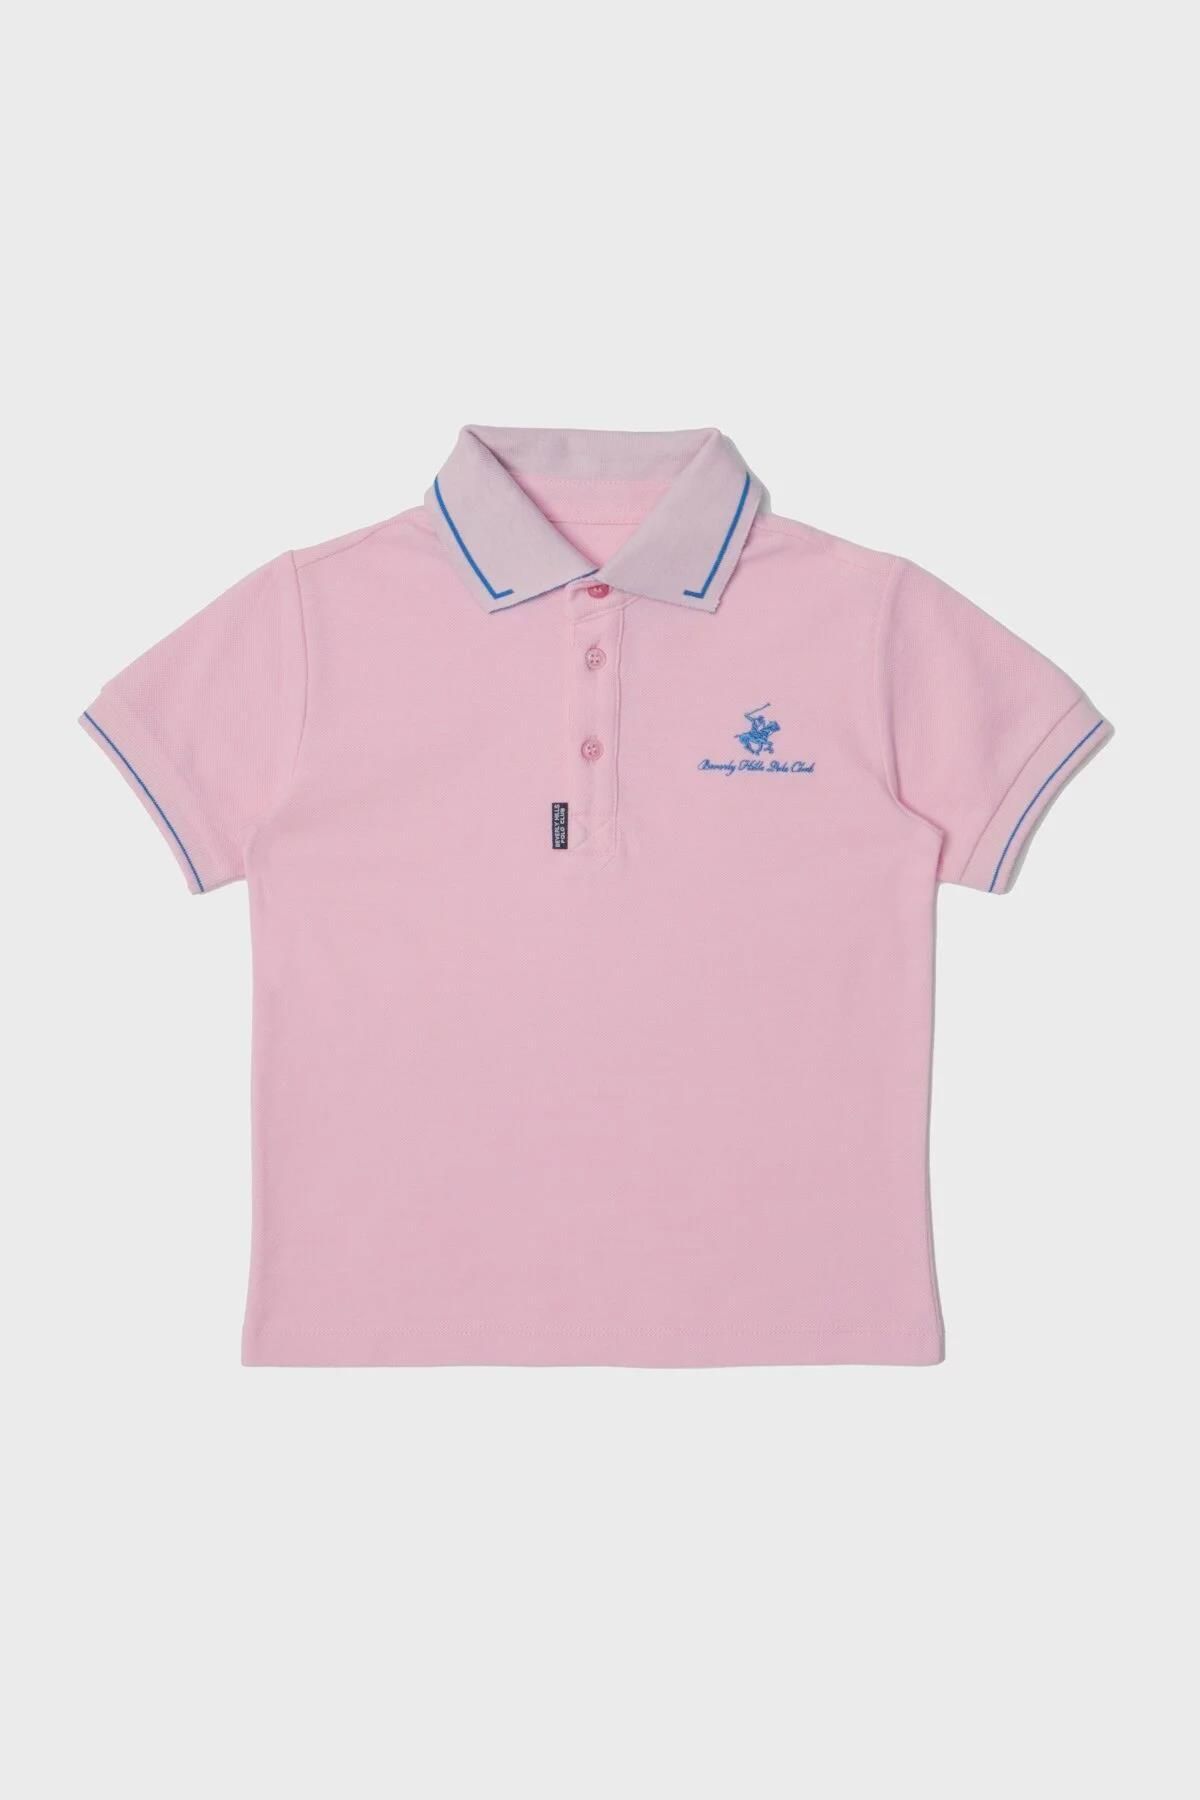 Beverly Hills Polo Club Bg Store Erkek Çocuk Pembe T-shirt 23ss2bhb515